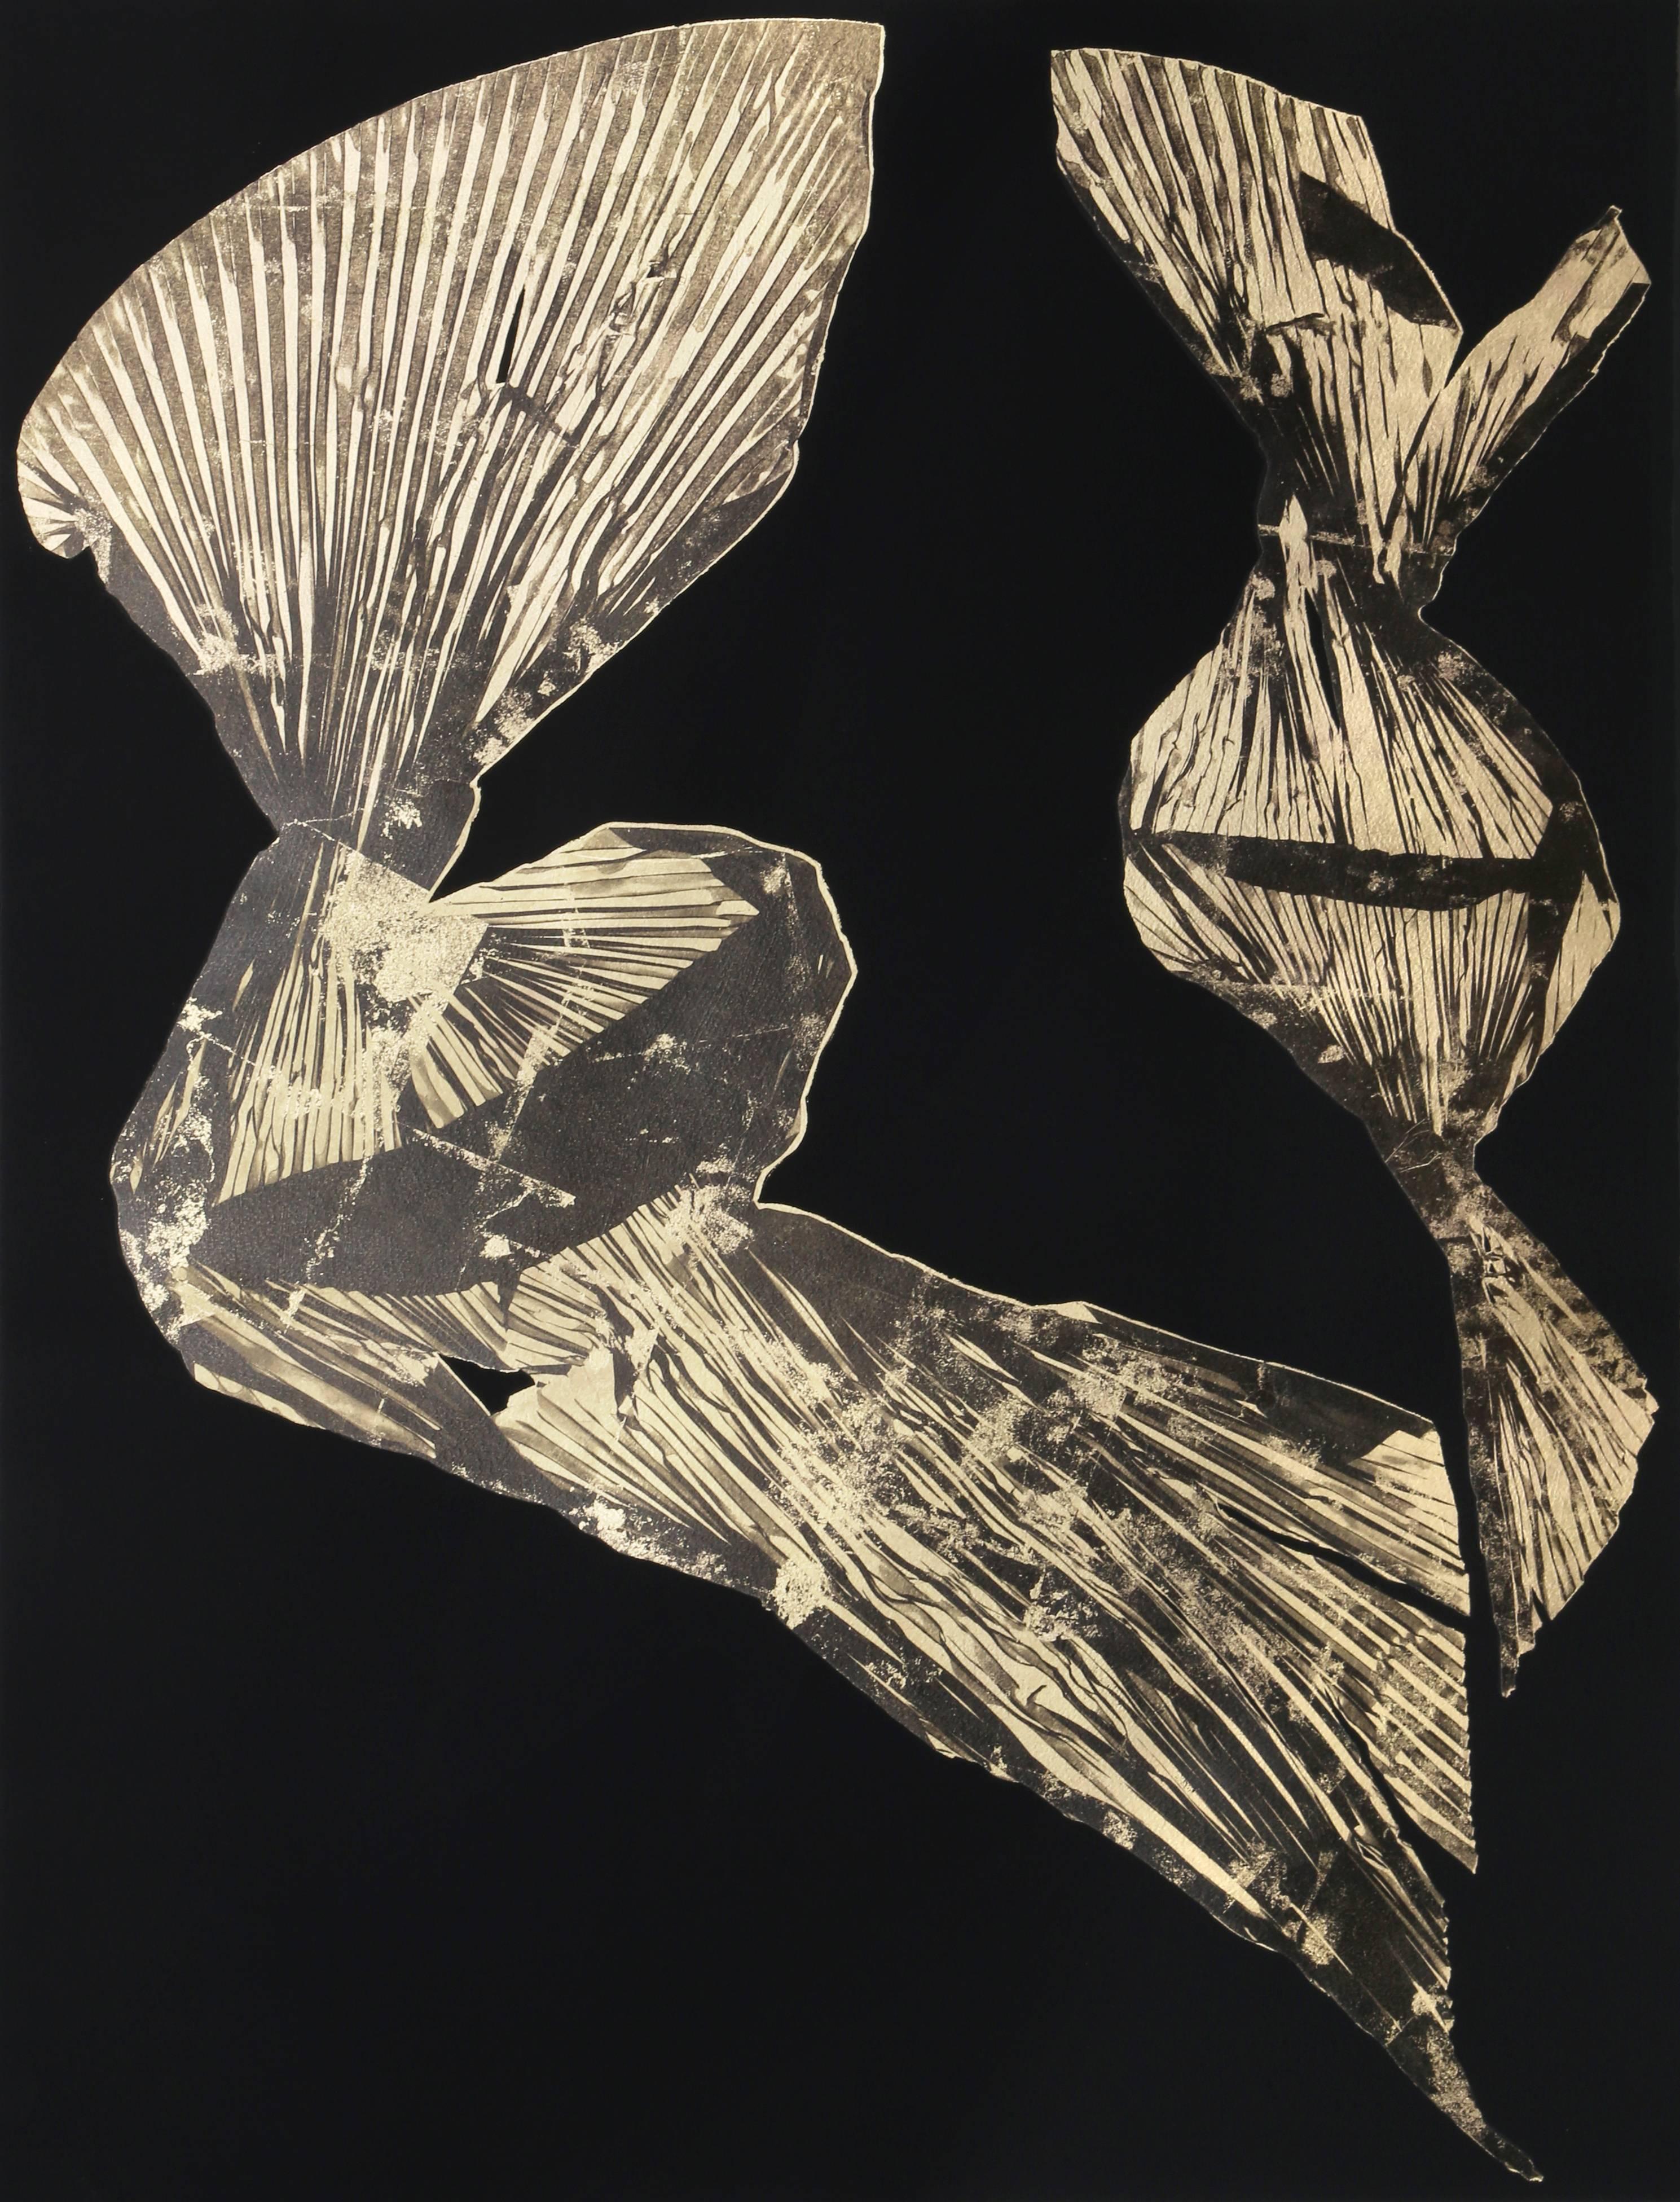 Lynda Benglis Abstract Print - Dual Nature - Black